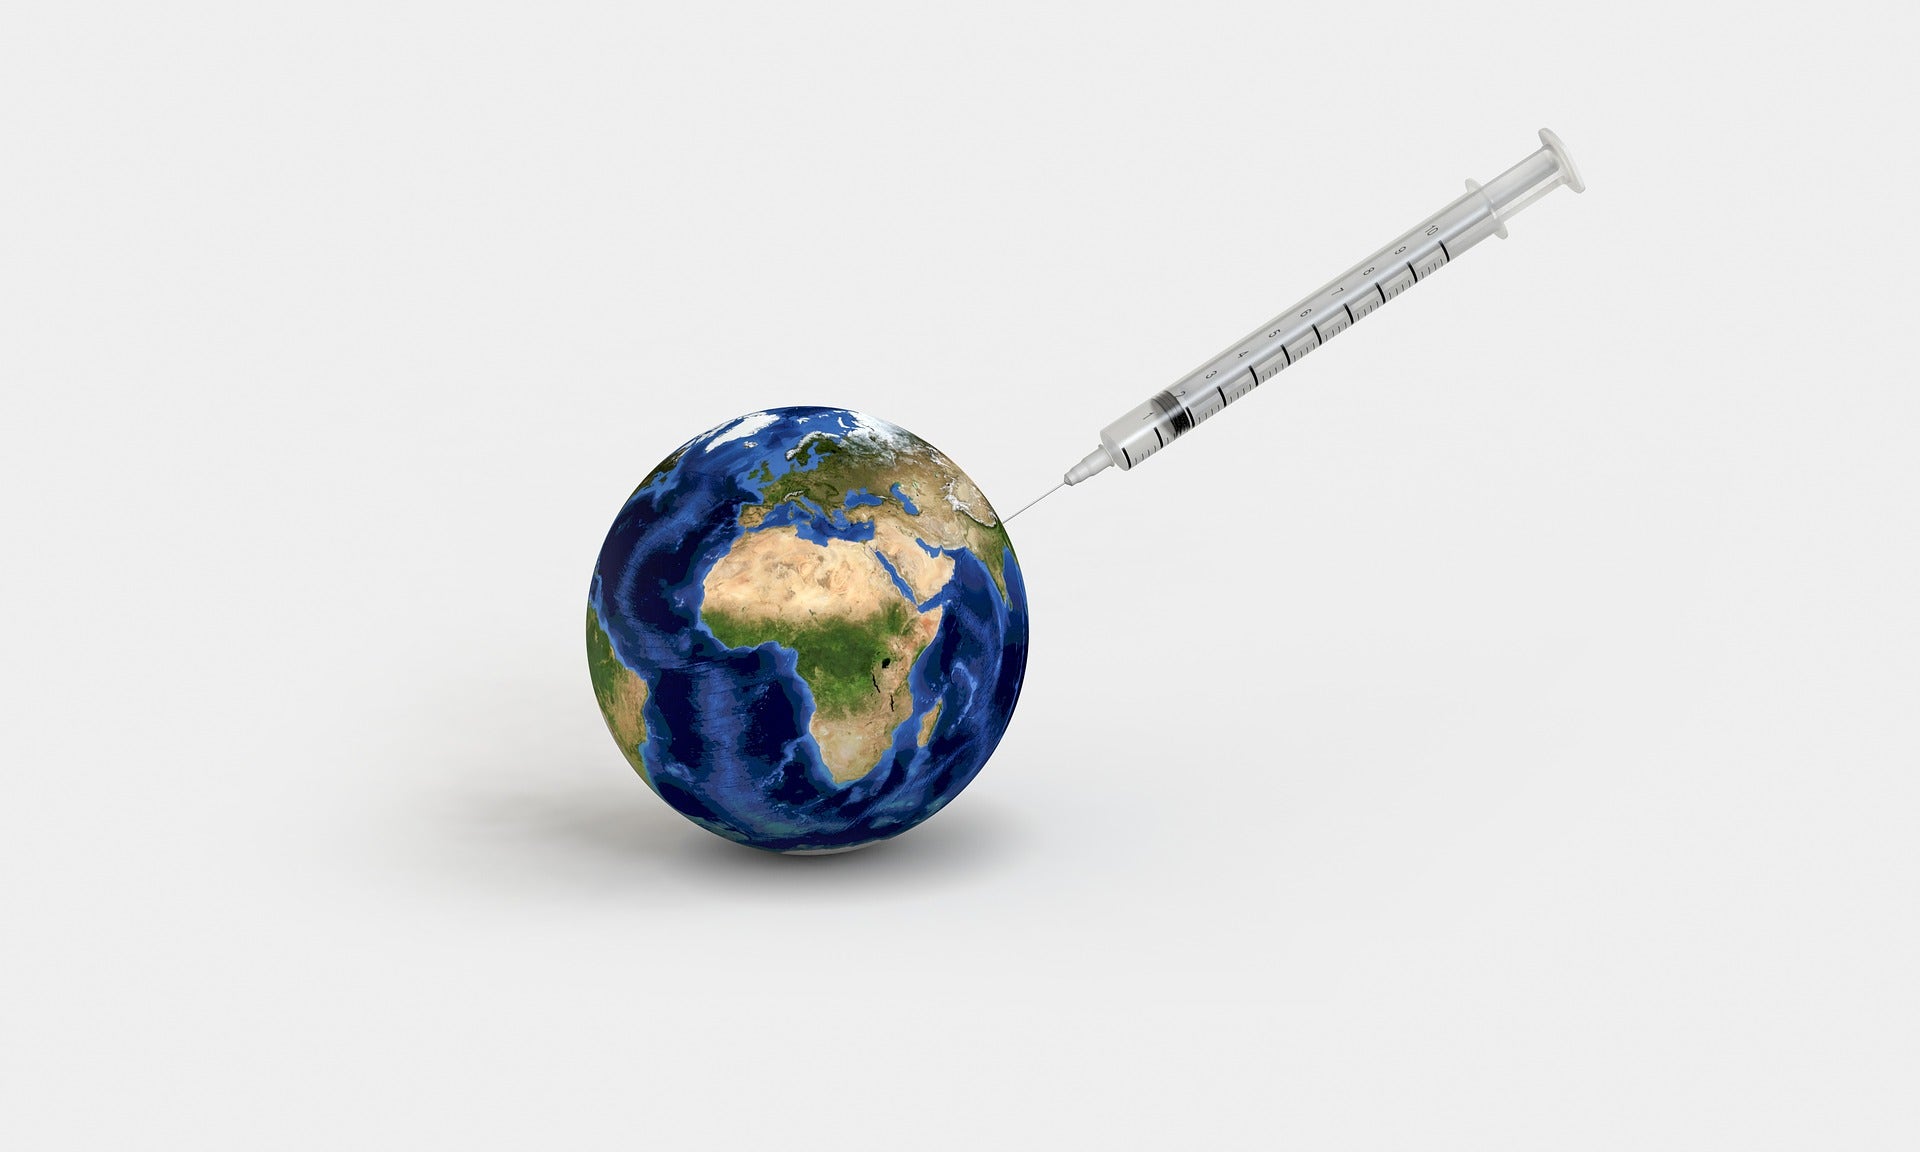 Merck's Coronavirus Plan Of Attack: 2 Partnerships, M&A Deal Aimed At Treatment, Vaccine Development